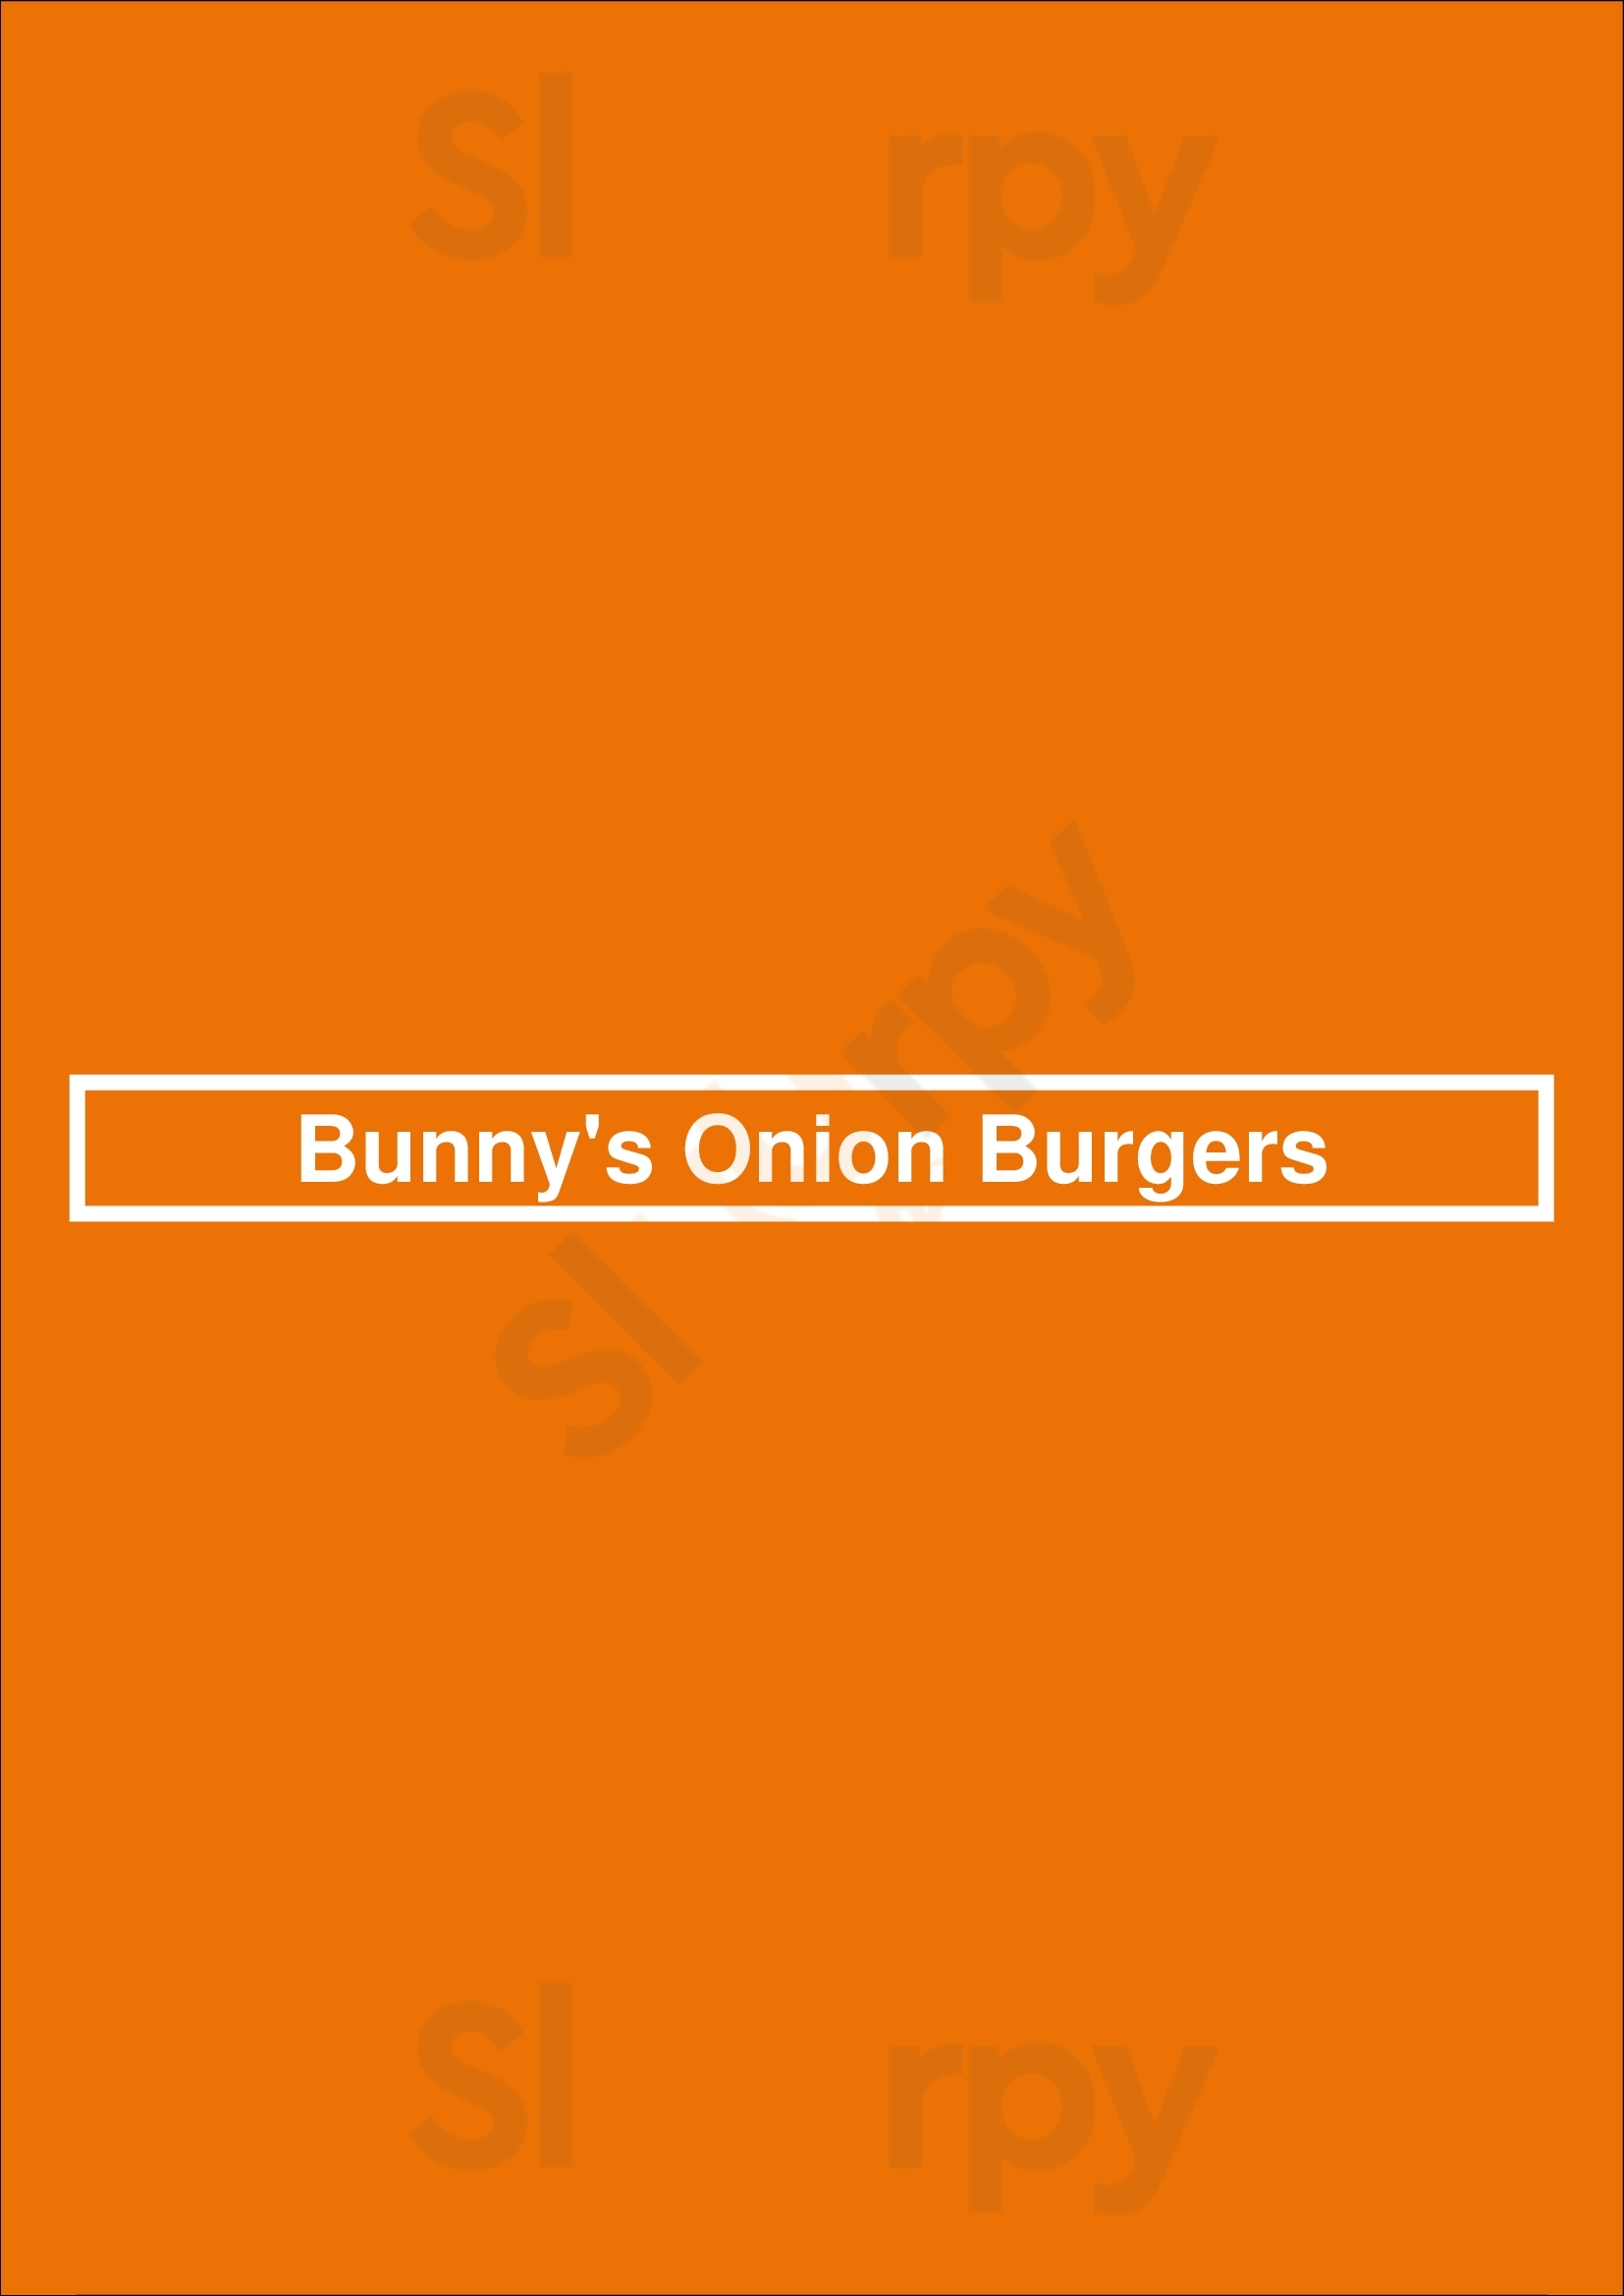 Bunny's Onion Burgers Oklahoma City Menu - 1